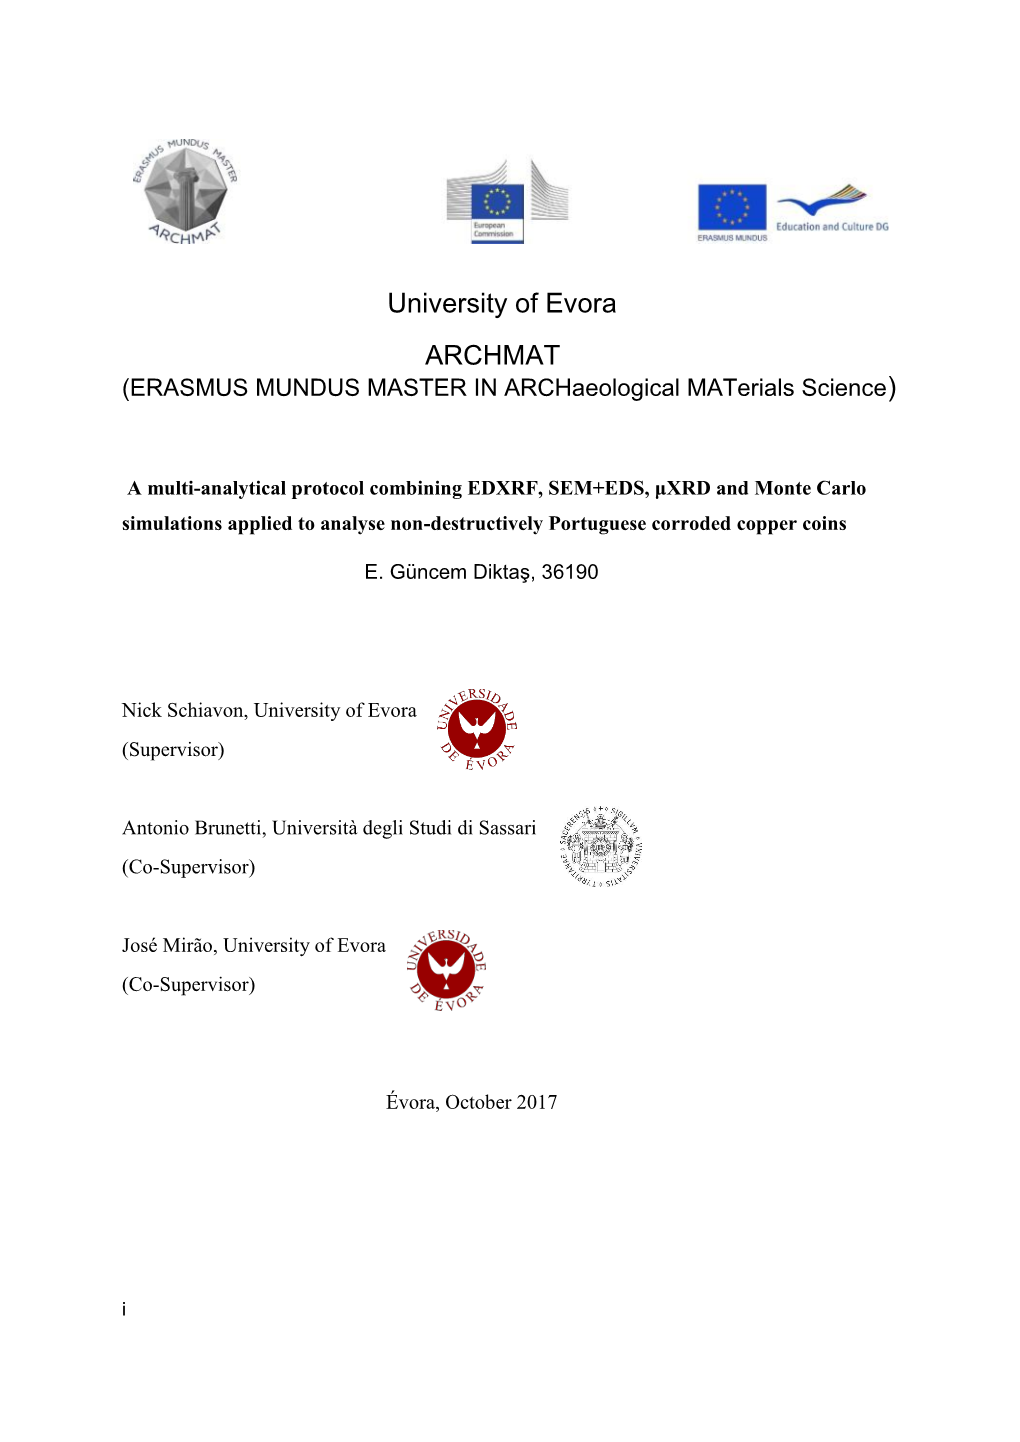 University of Evora ARCHMAT (ERASMUS MUNDUS MASTER in Archaeological Materials Science)